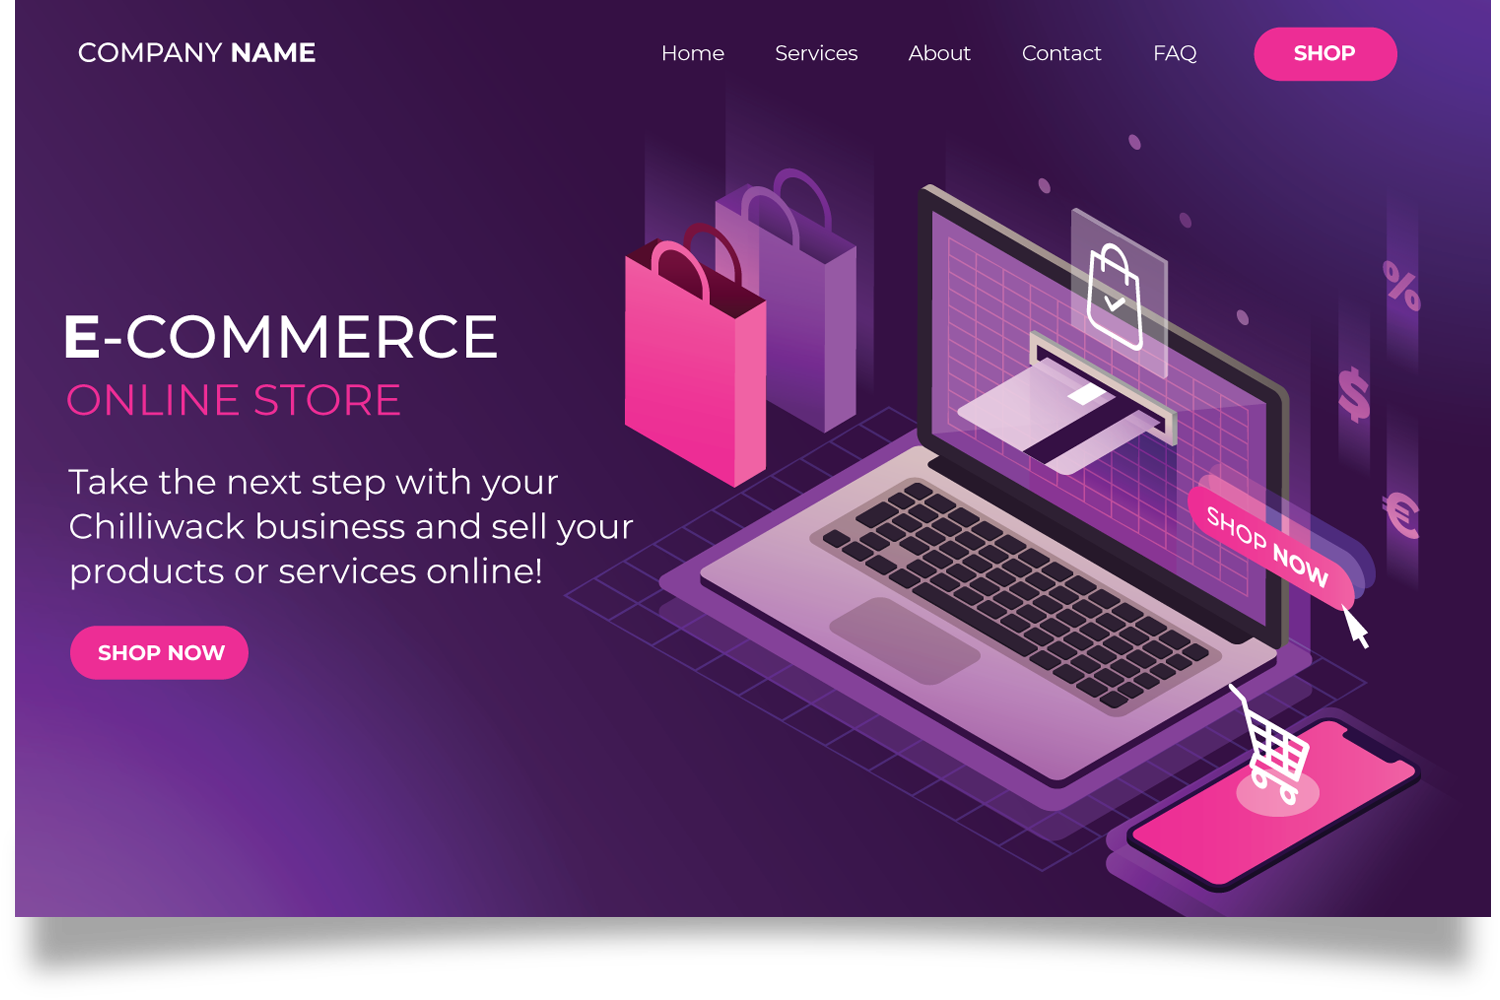 E-Commerce Online Store WordPress + Shopify Web Development